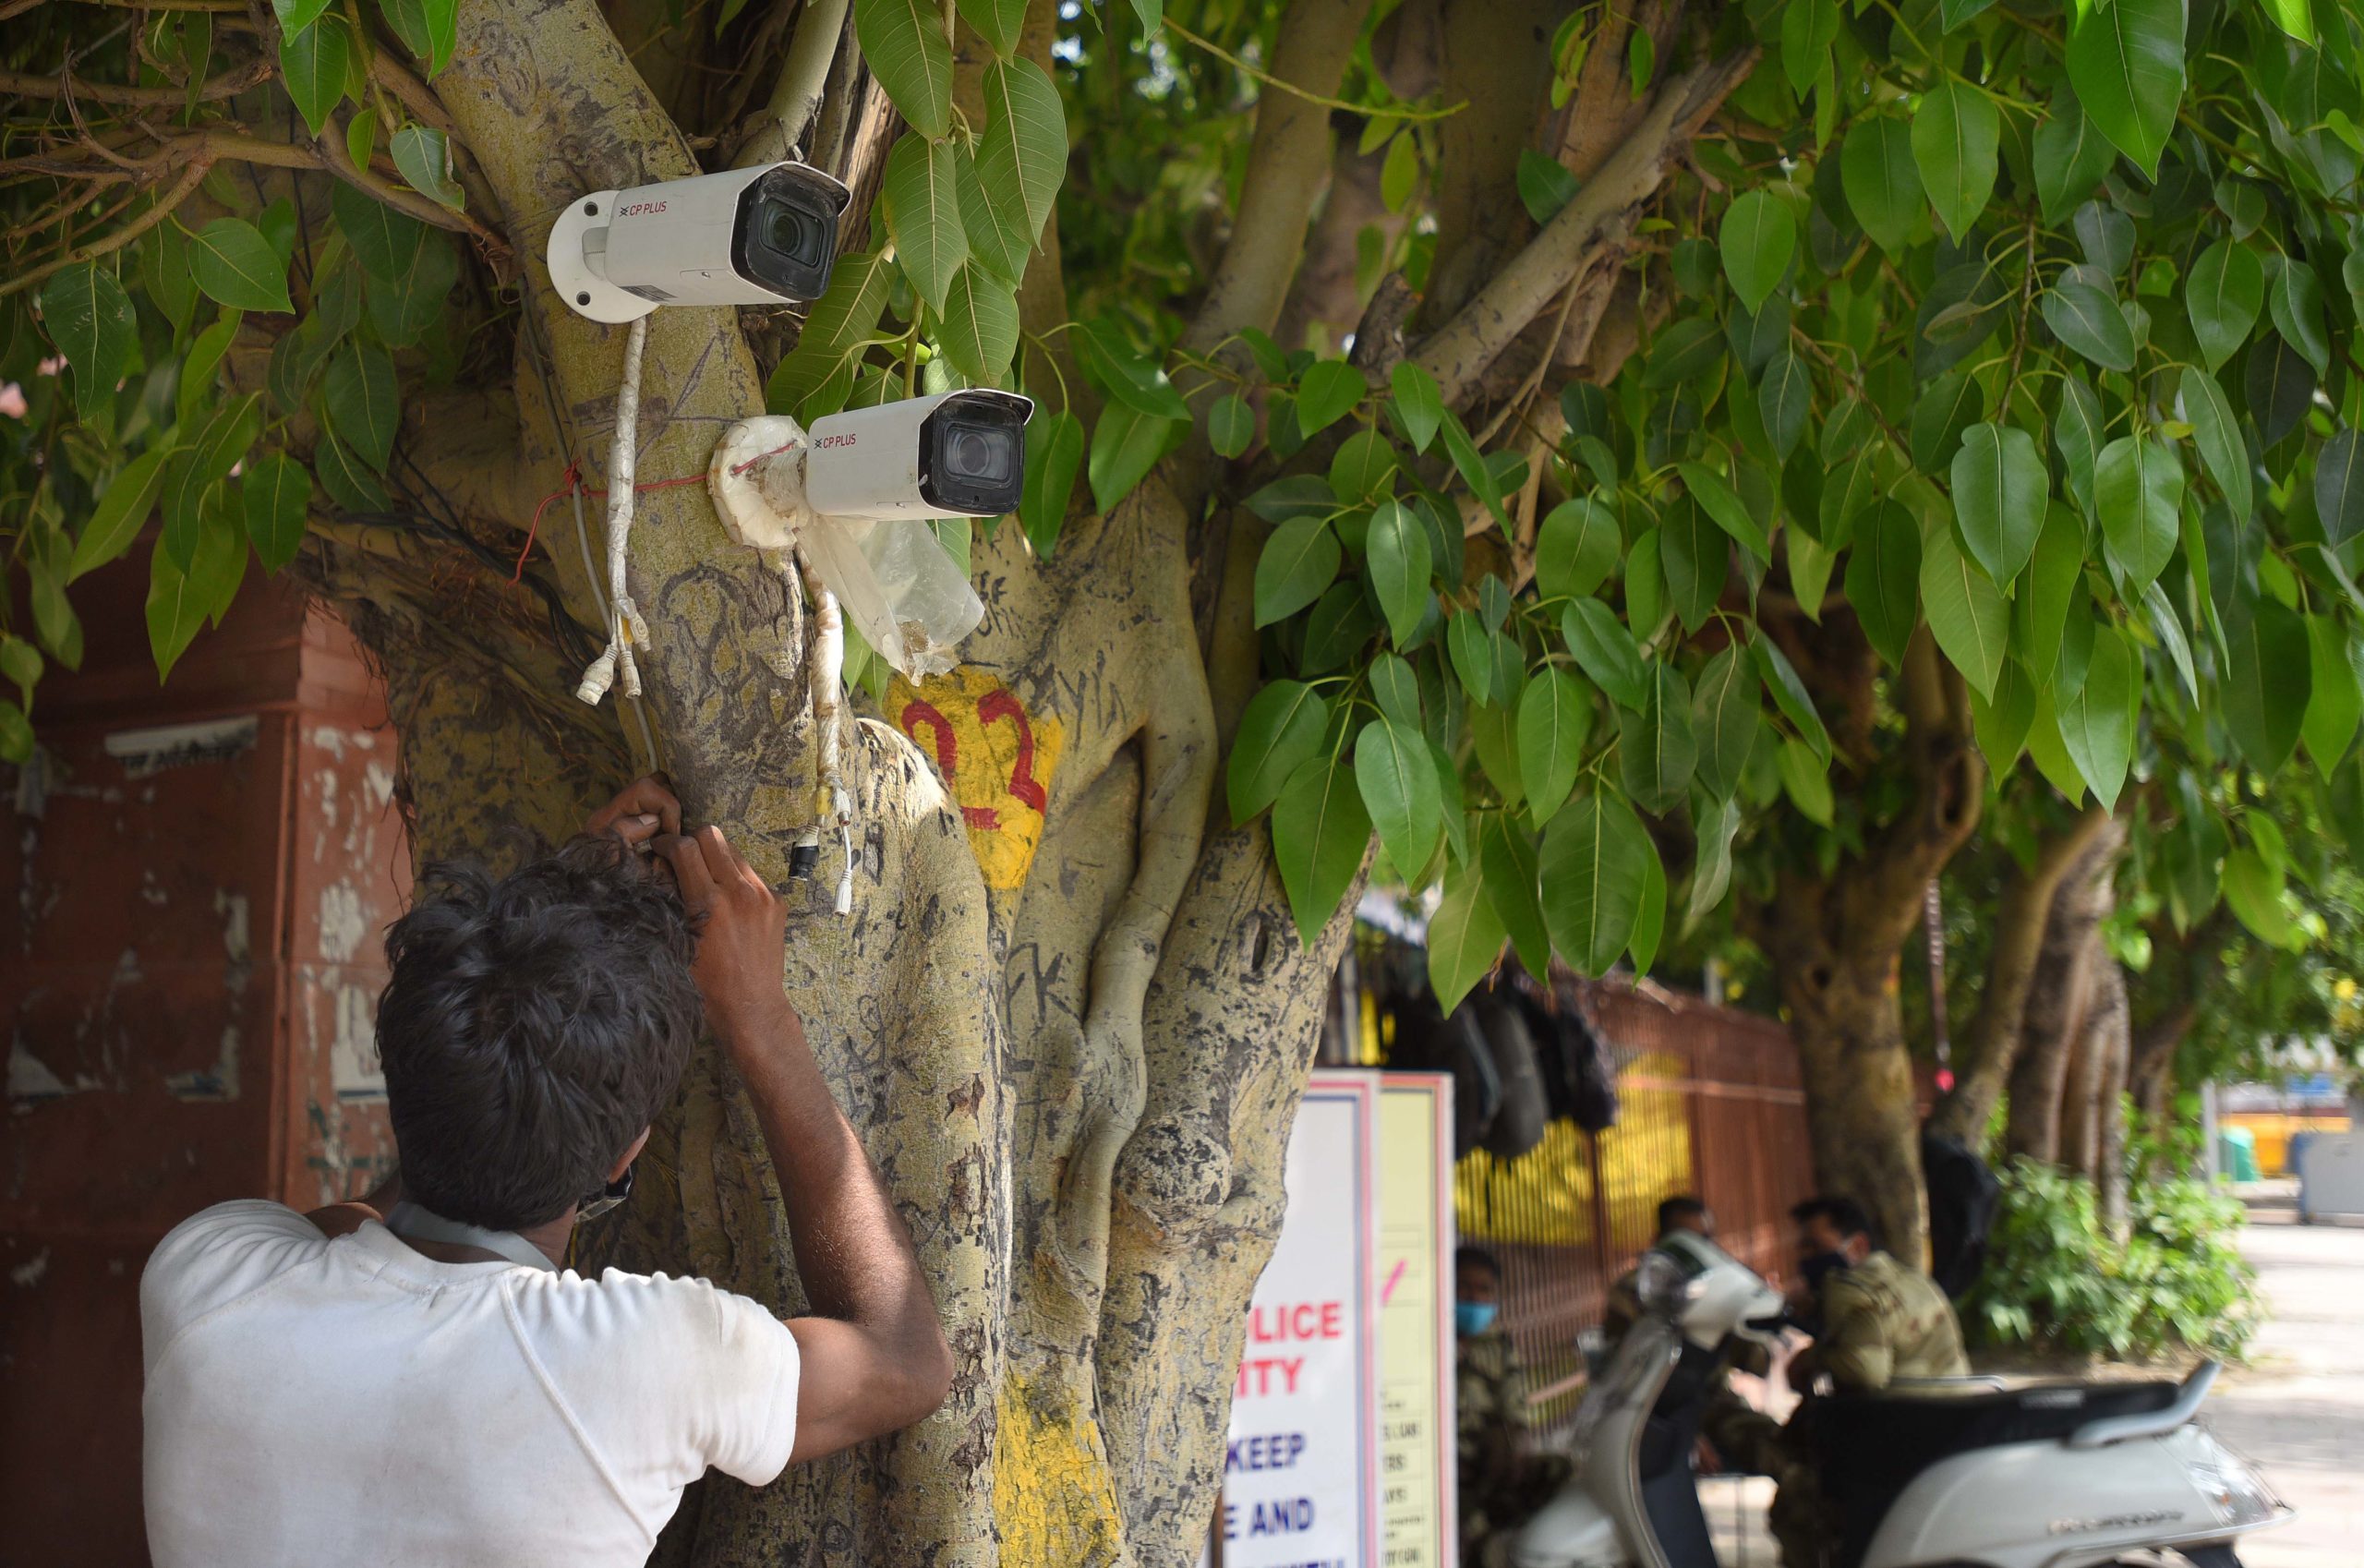 Delhi ahead of NY, London in terms of CCTV cameras installed per sq. mile: Kejriwal